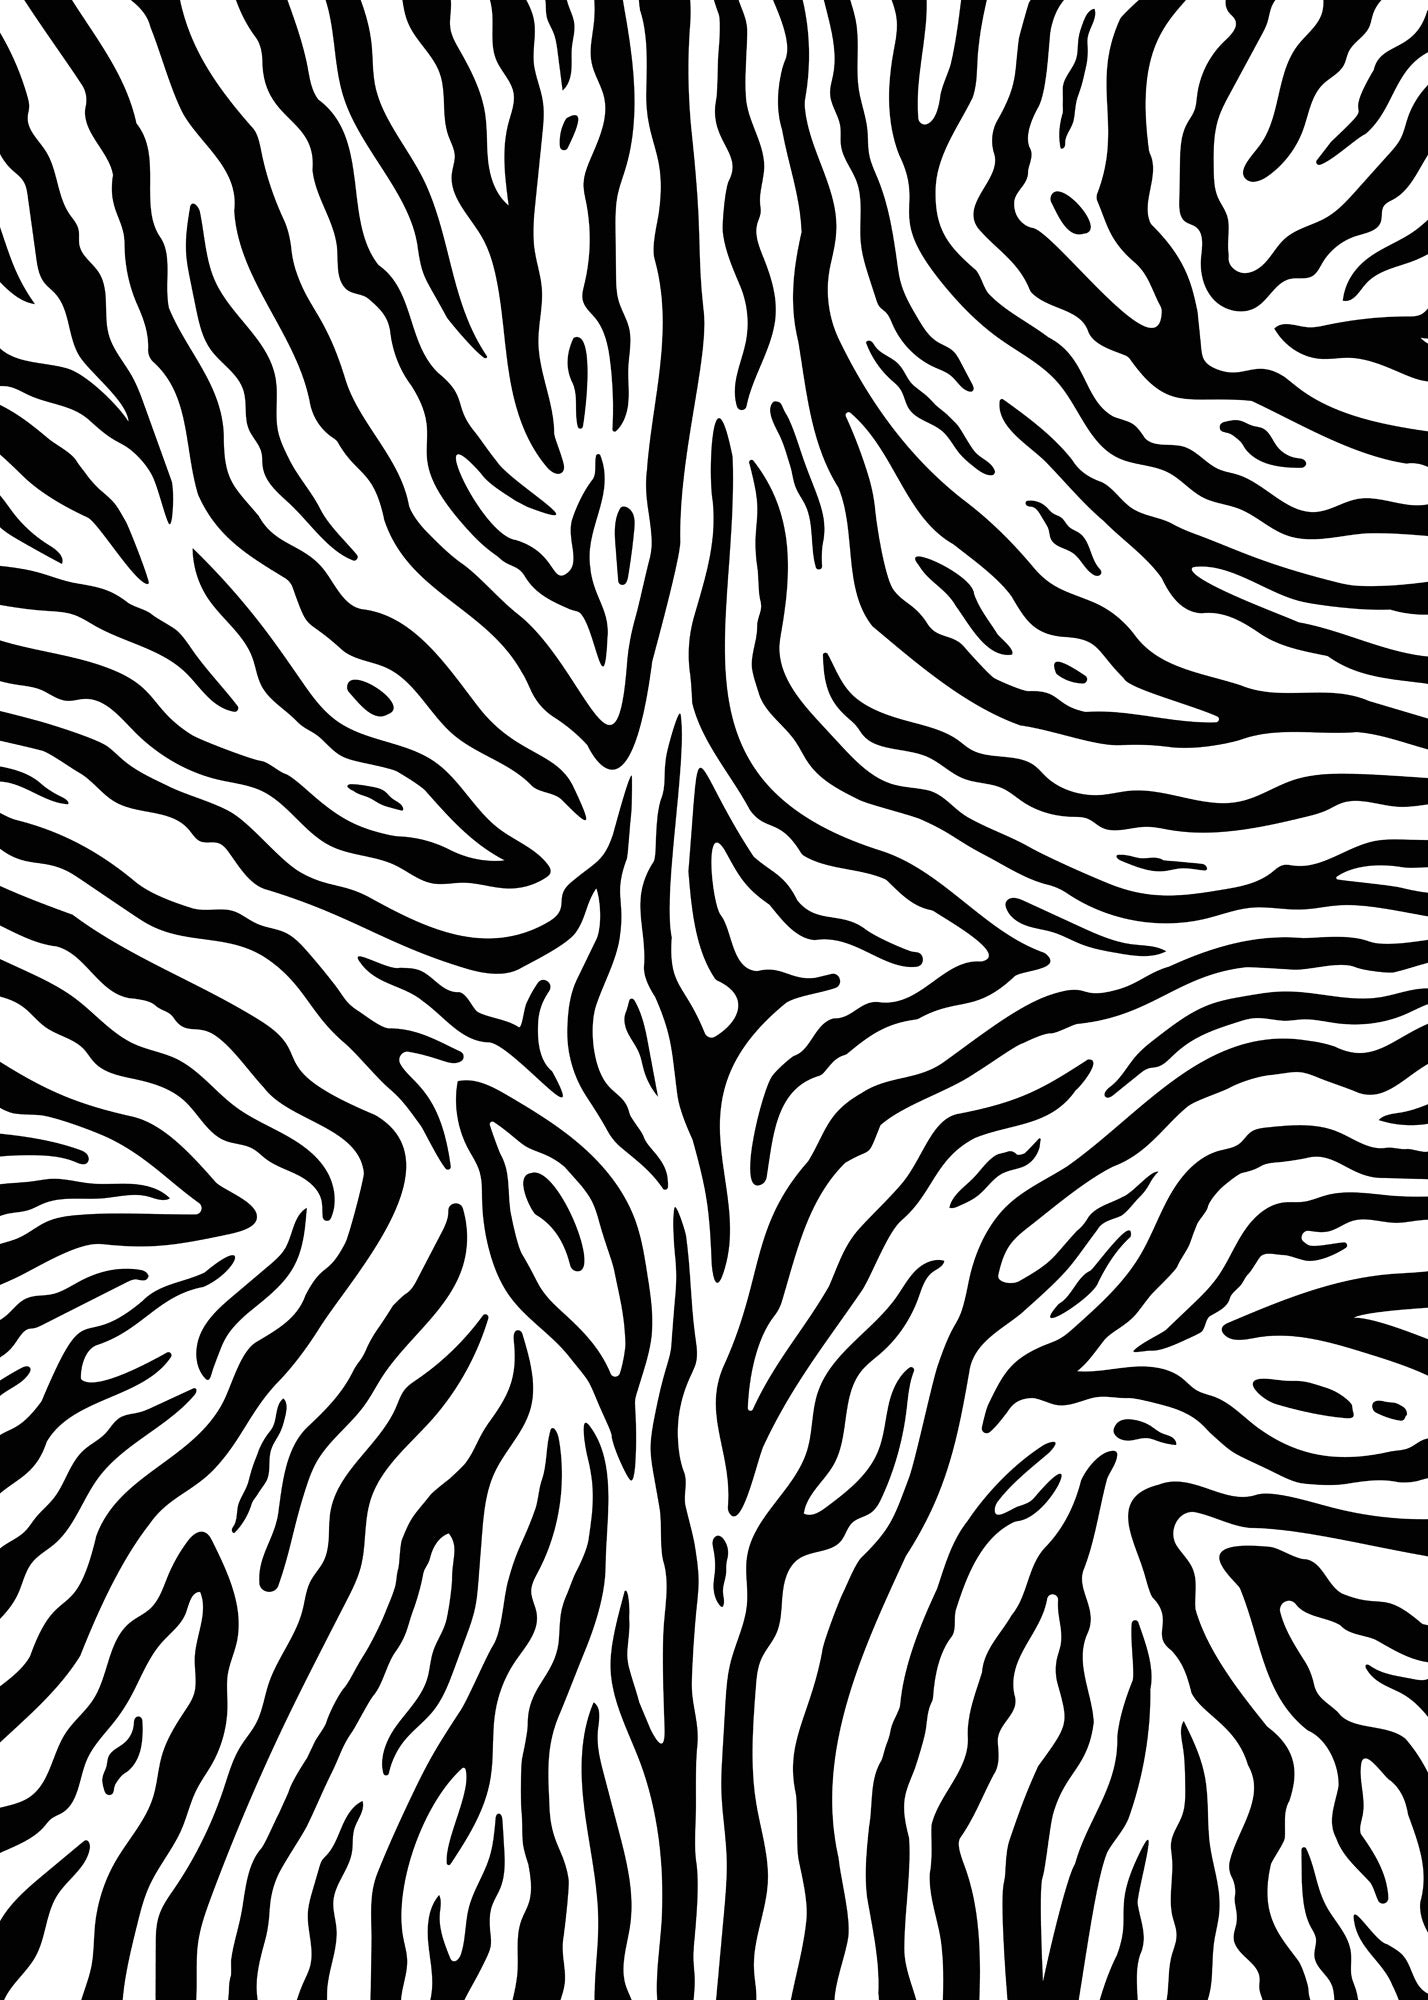 Custom Zebra Large Vinyl Photography Backdrop by Club Backdrops